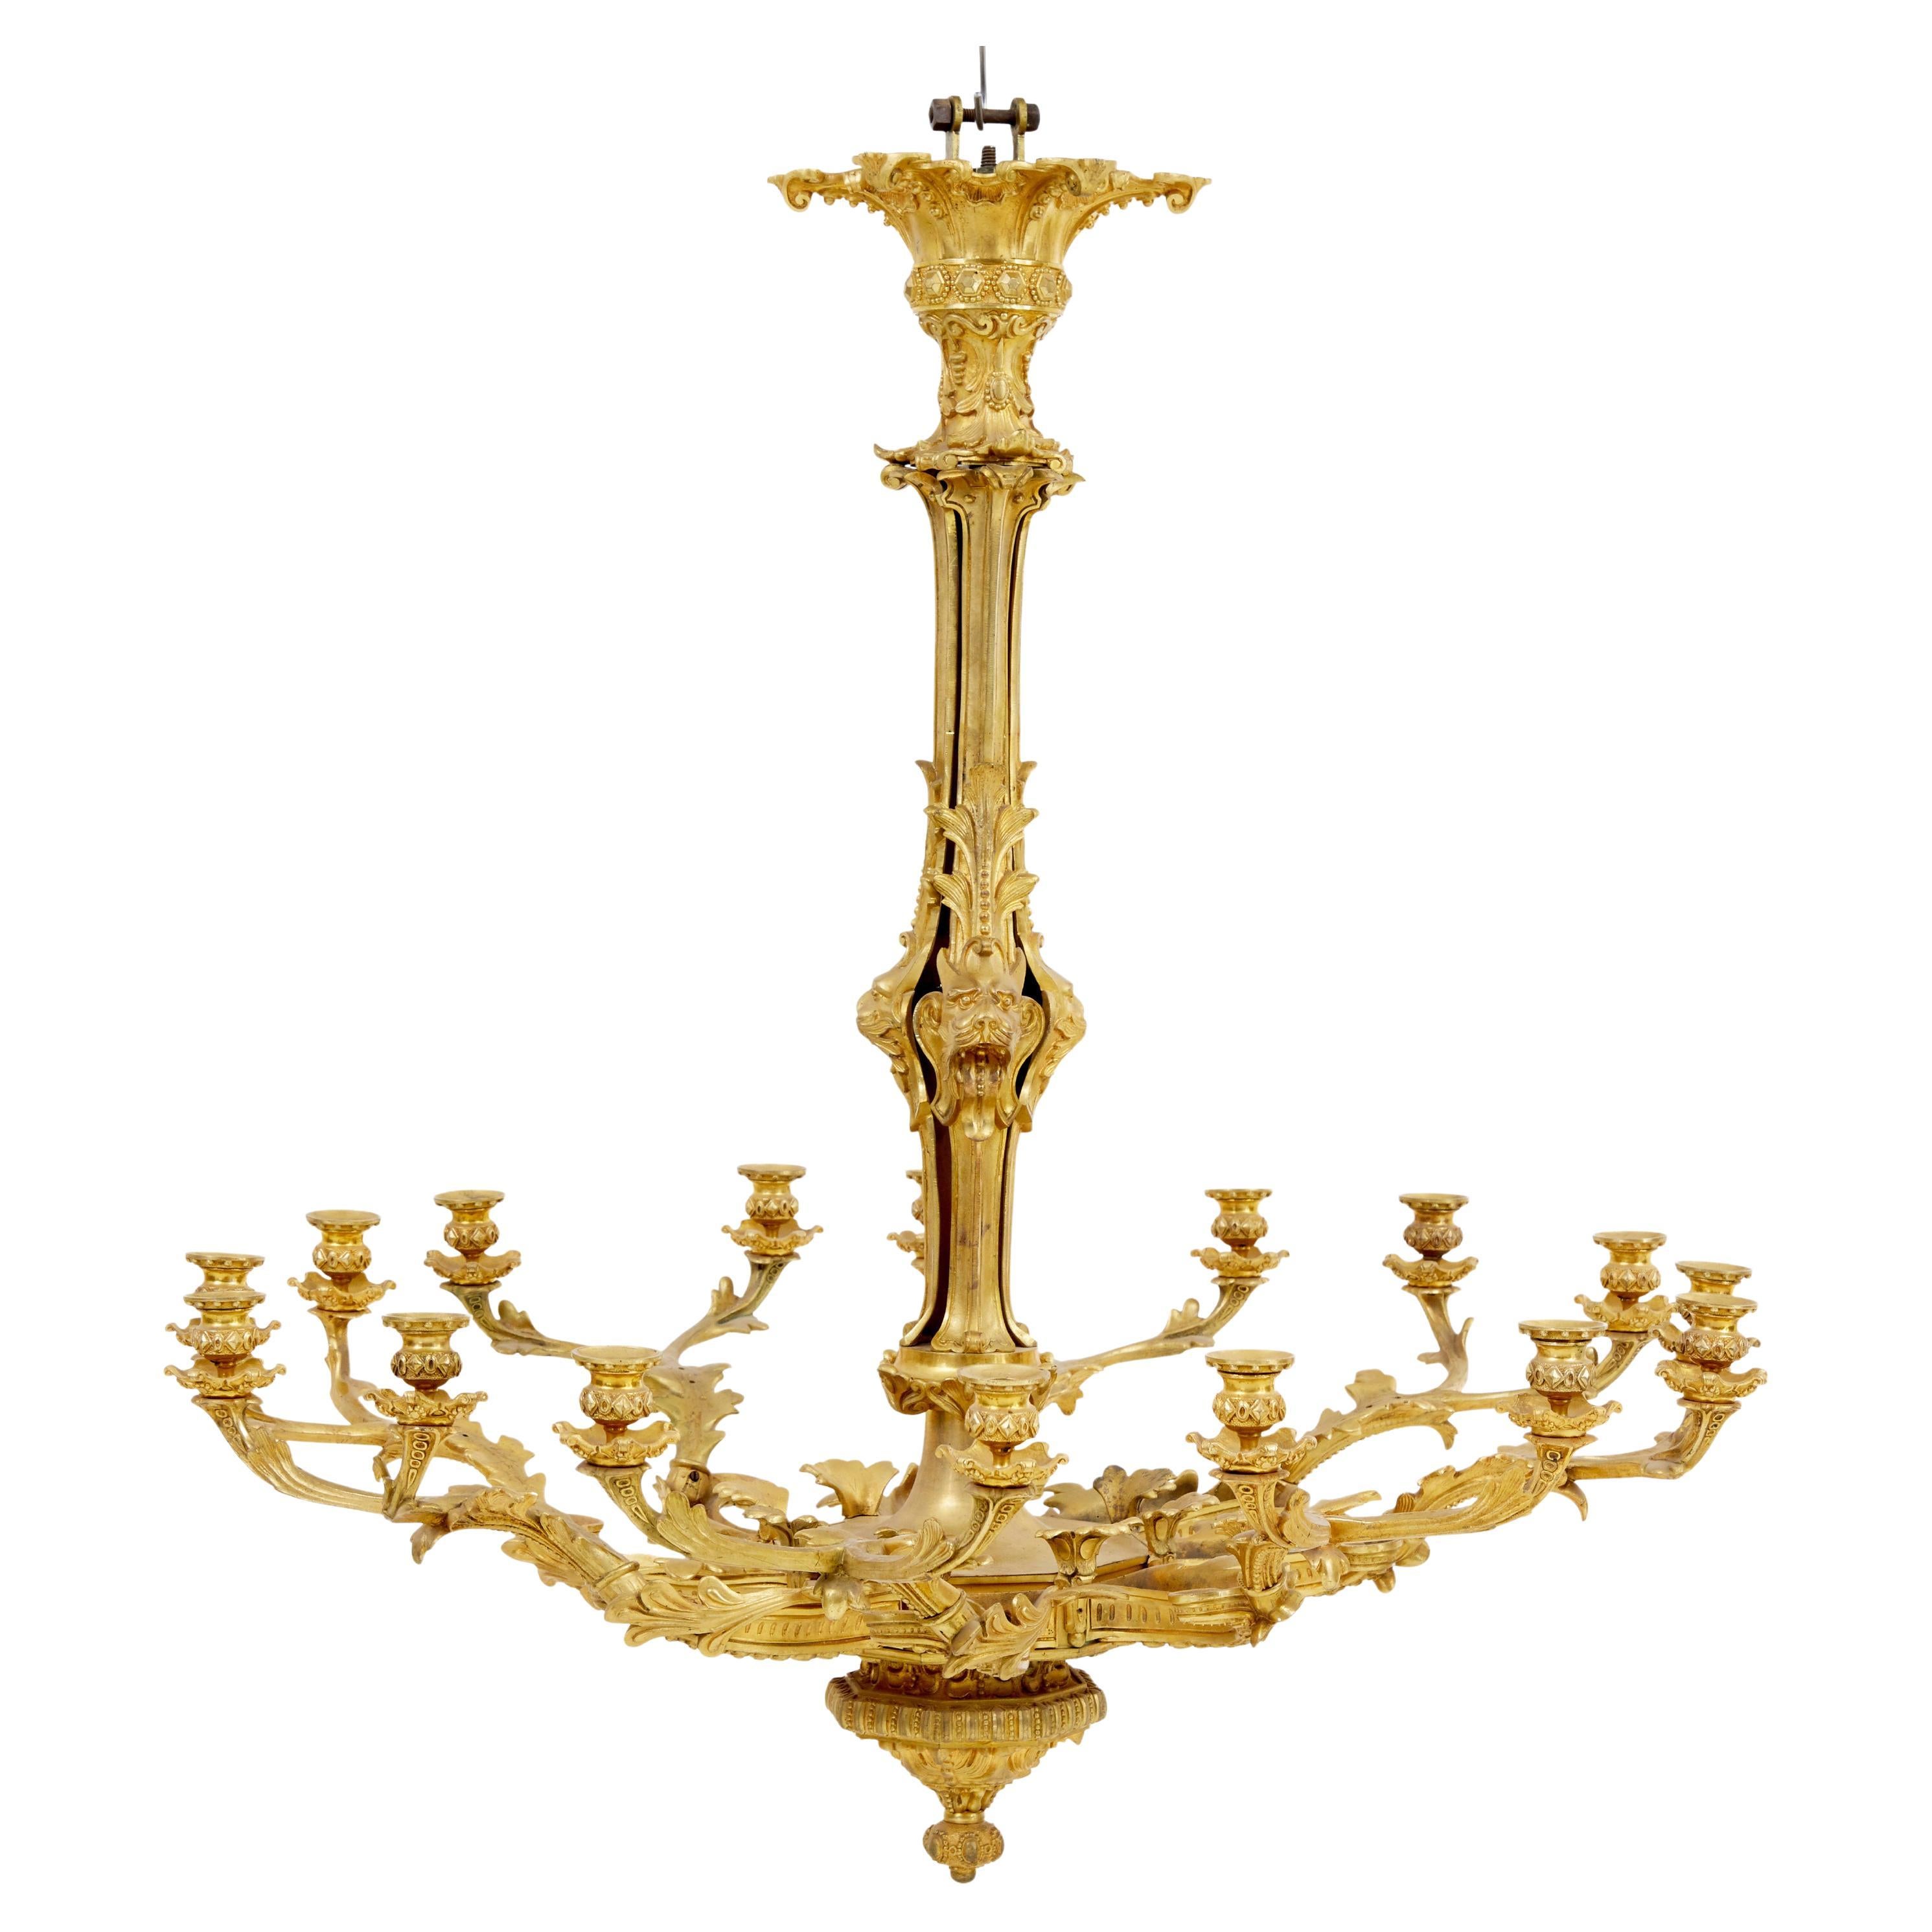 19th century French gilded ormolu 8-arm chandelier